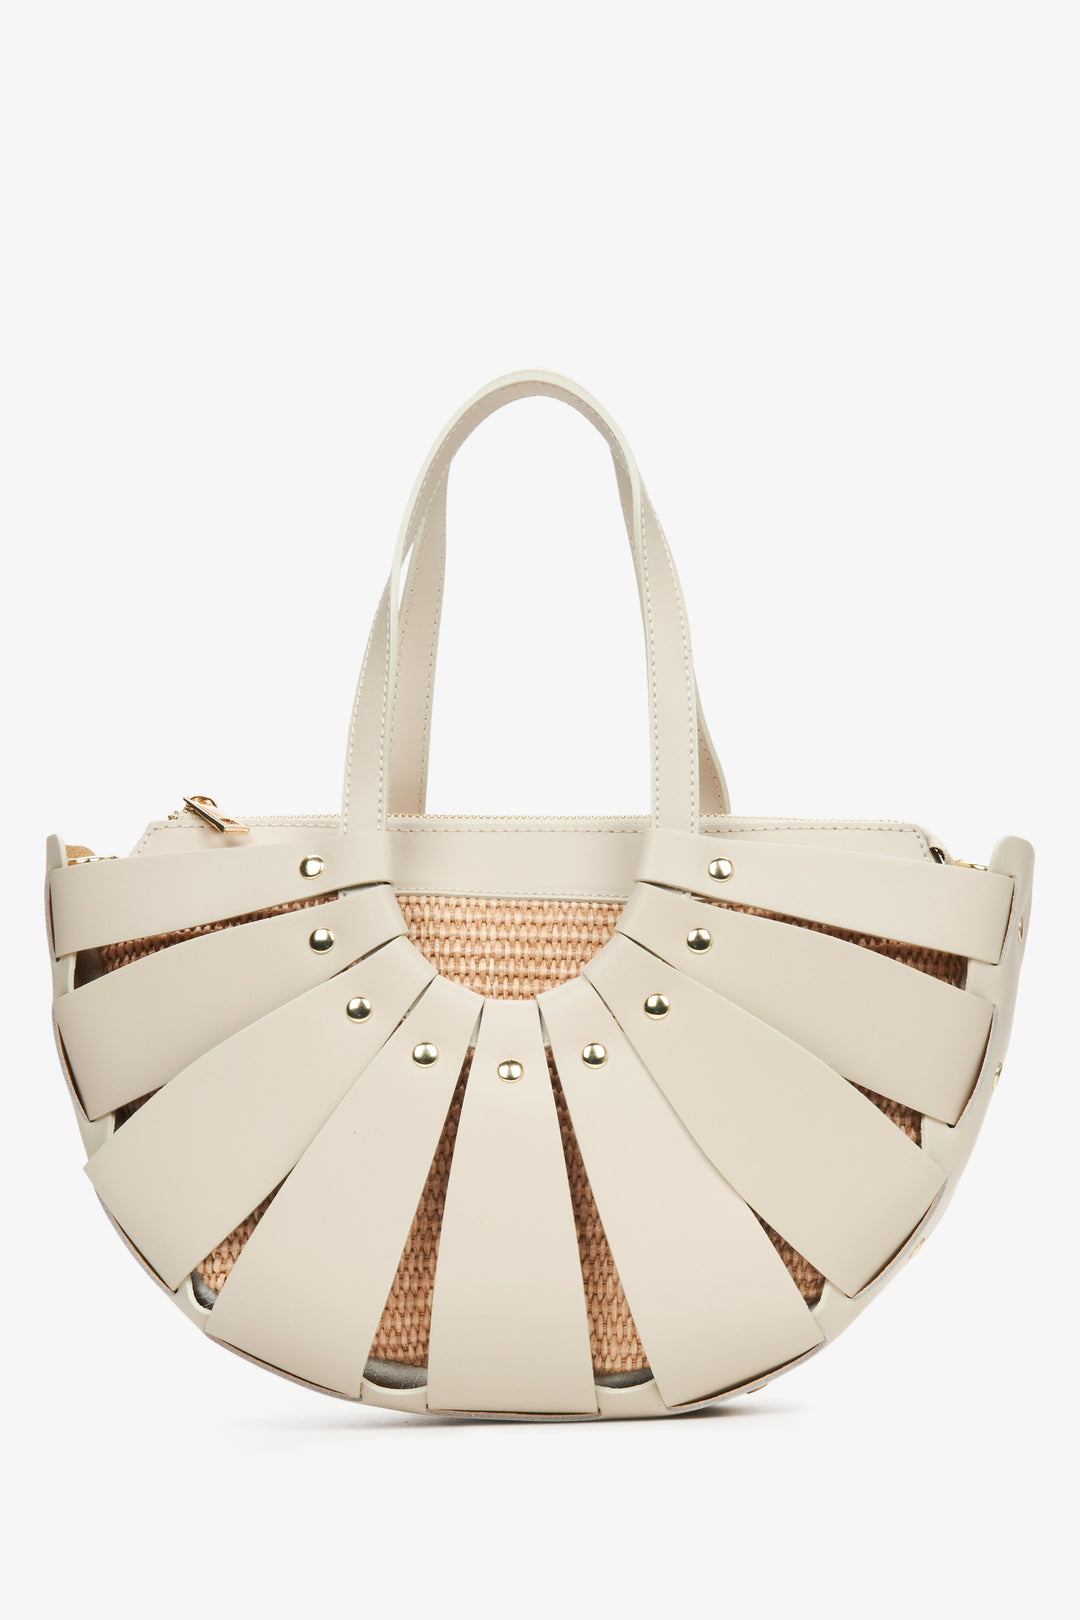 Estro beige leather women's handbag.